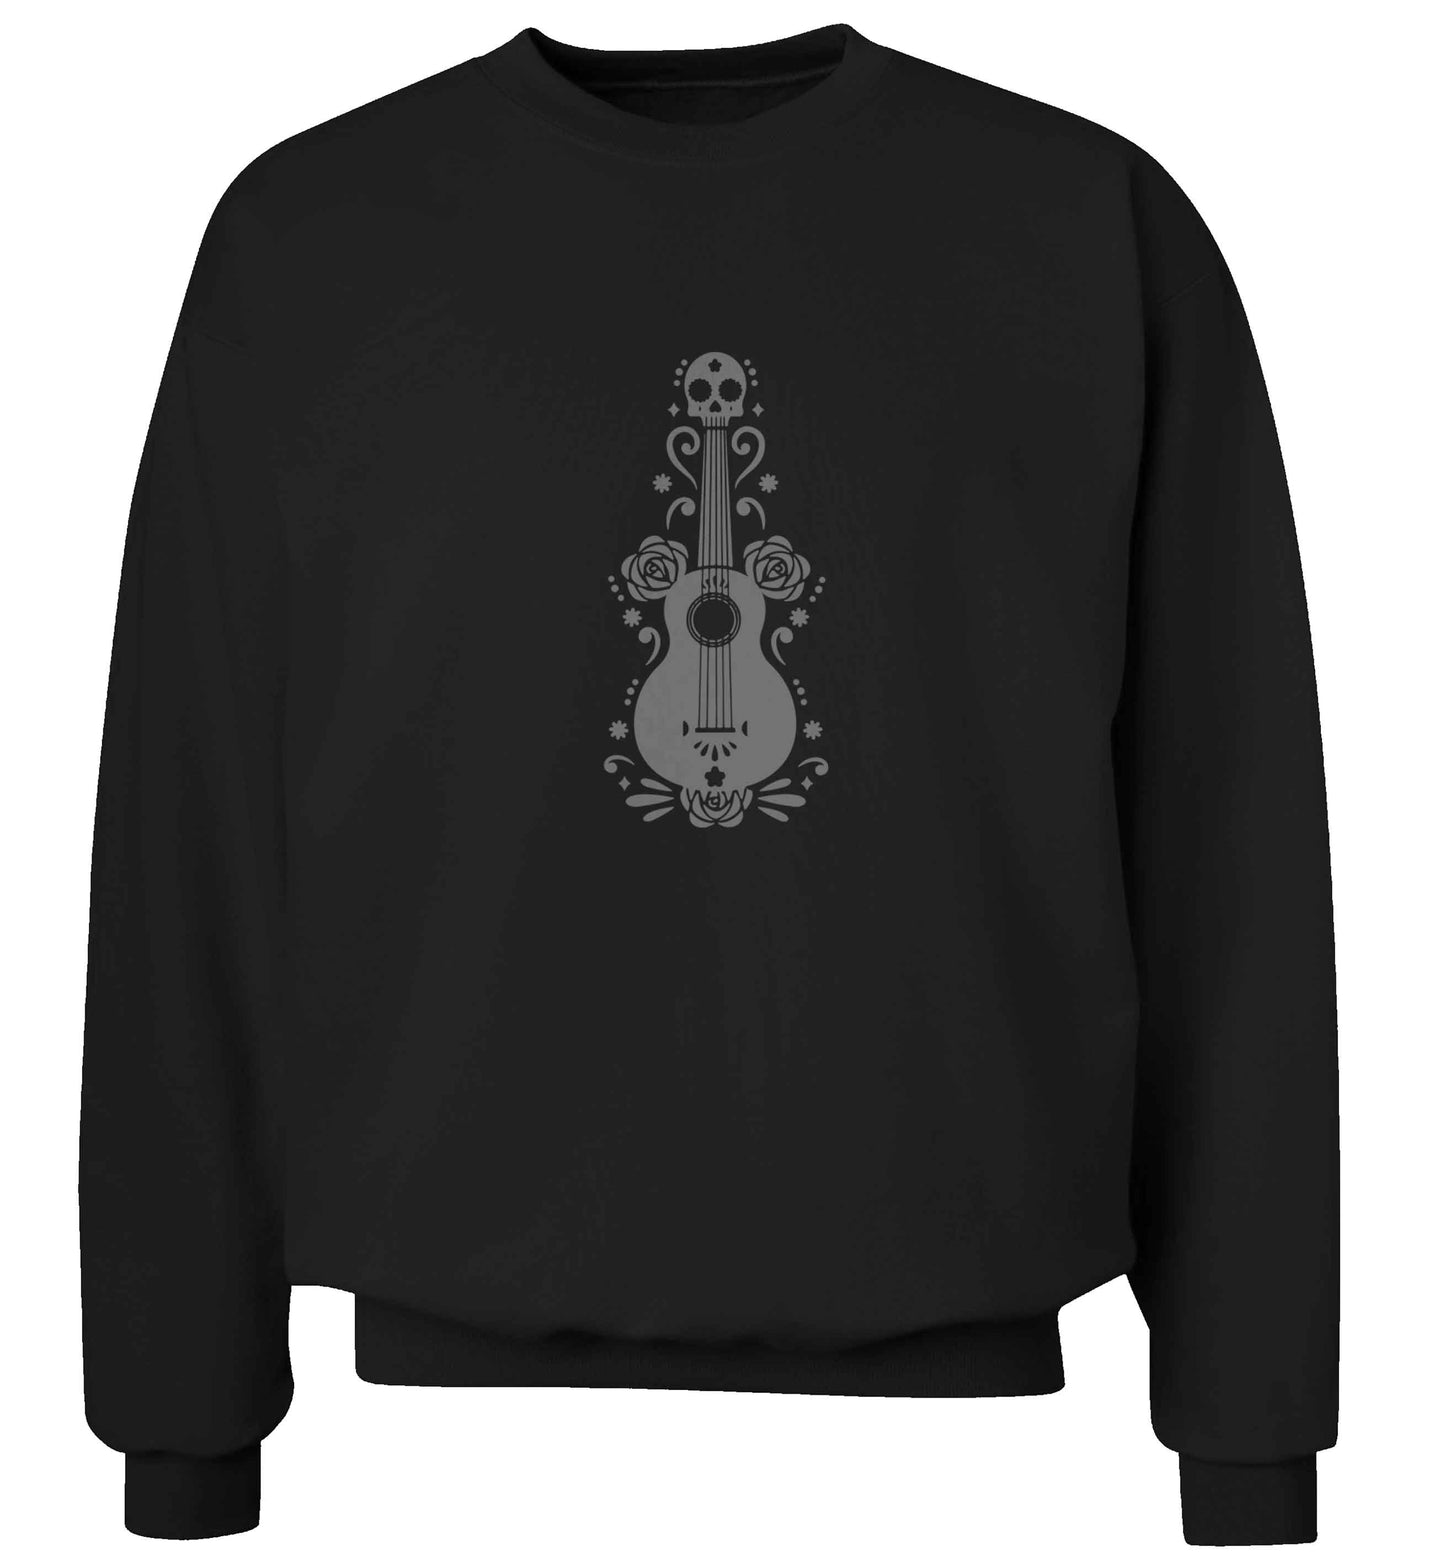 Guitar skull illustration adult's unisex black sweater 2XL